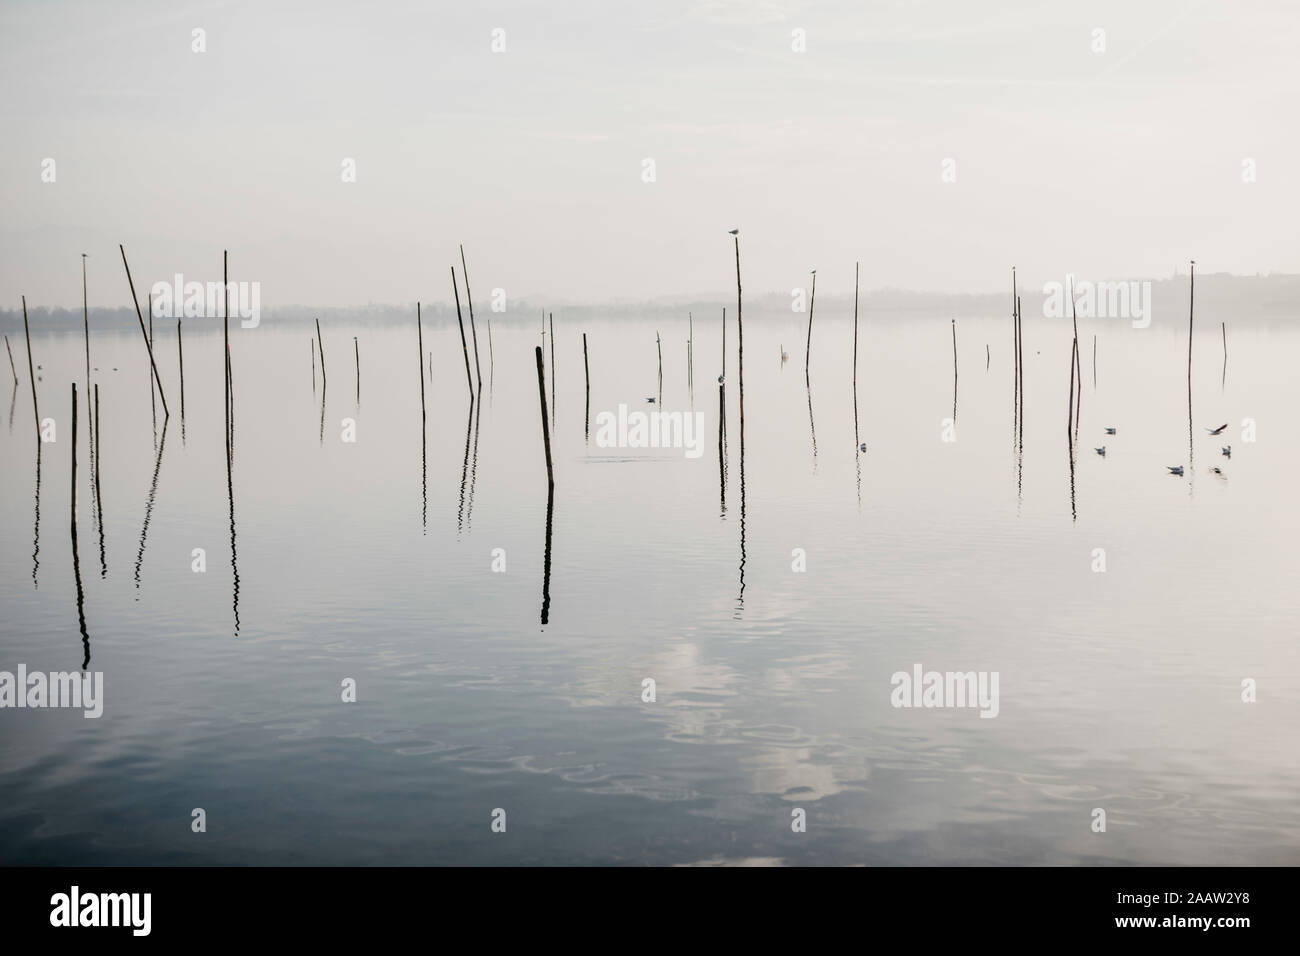 Switzerland, Zurich, Pfffikon, foggy view of lake Stock Photo